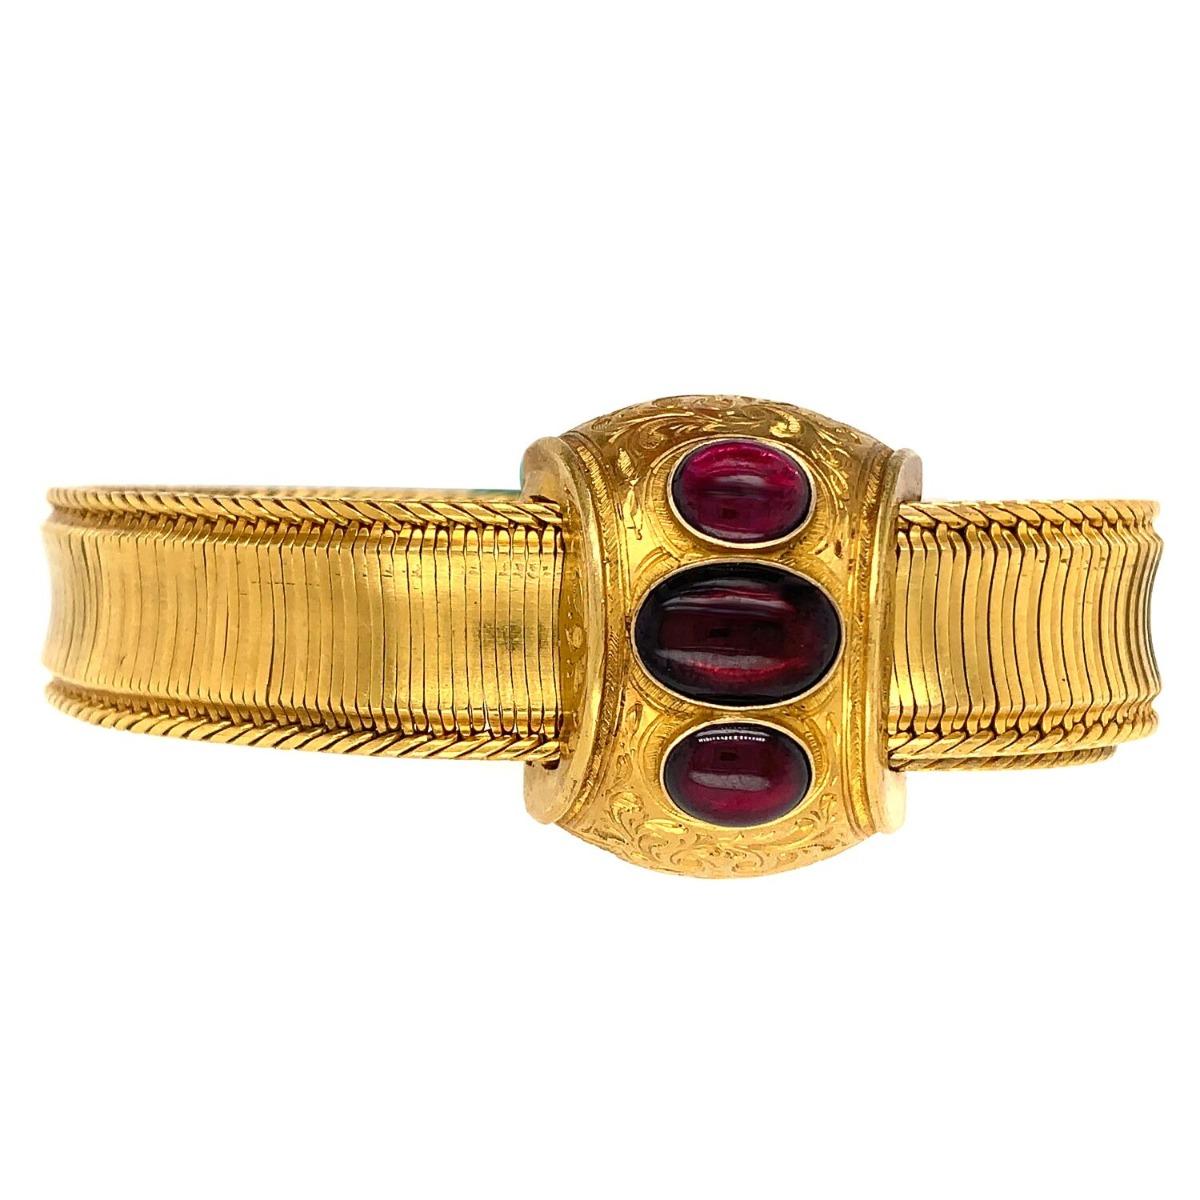 Victorian 18K Yellow Gold Sliding Bracelet

Period: Victorian
Metal: 18K Yellow Gold
Condition: Excellent
Item Weight: 32 grams
Width: 1.8 inch
Length: 1.9 inch